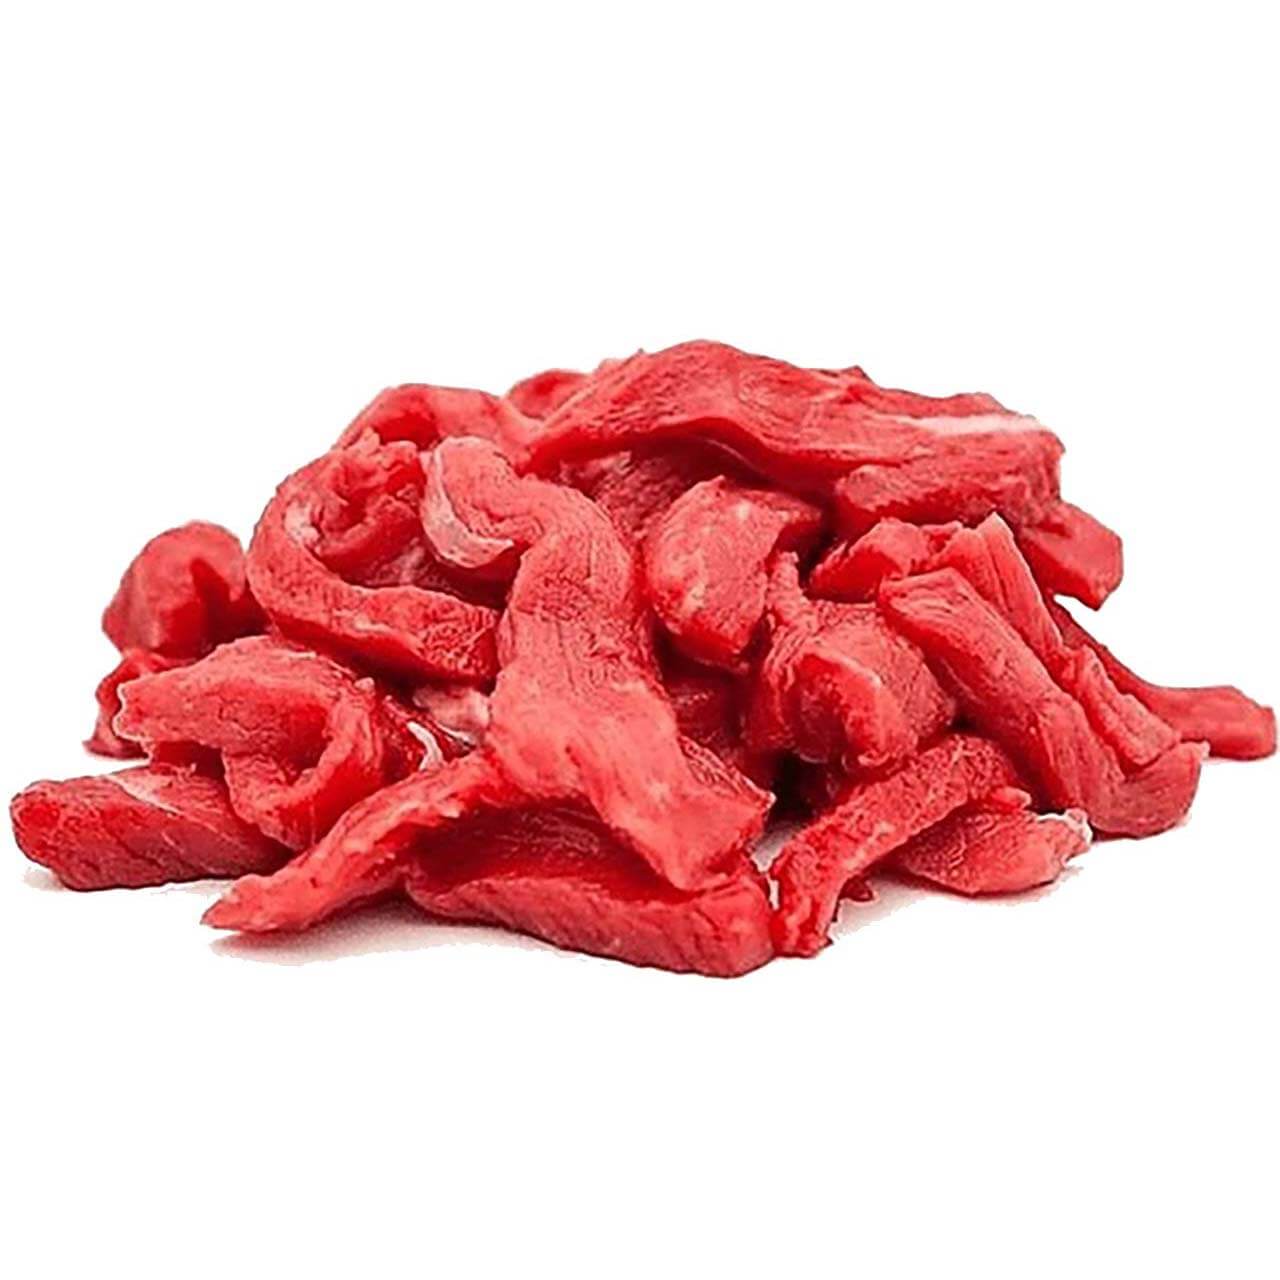 Beef Stir Fry Meat - Organic